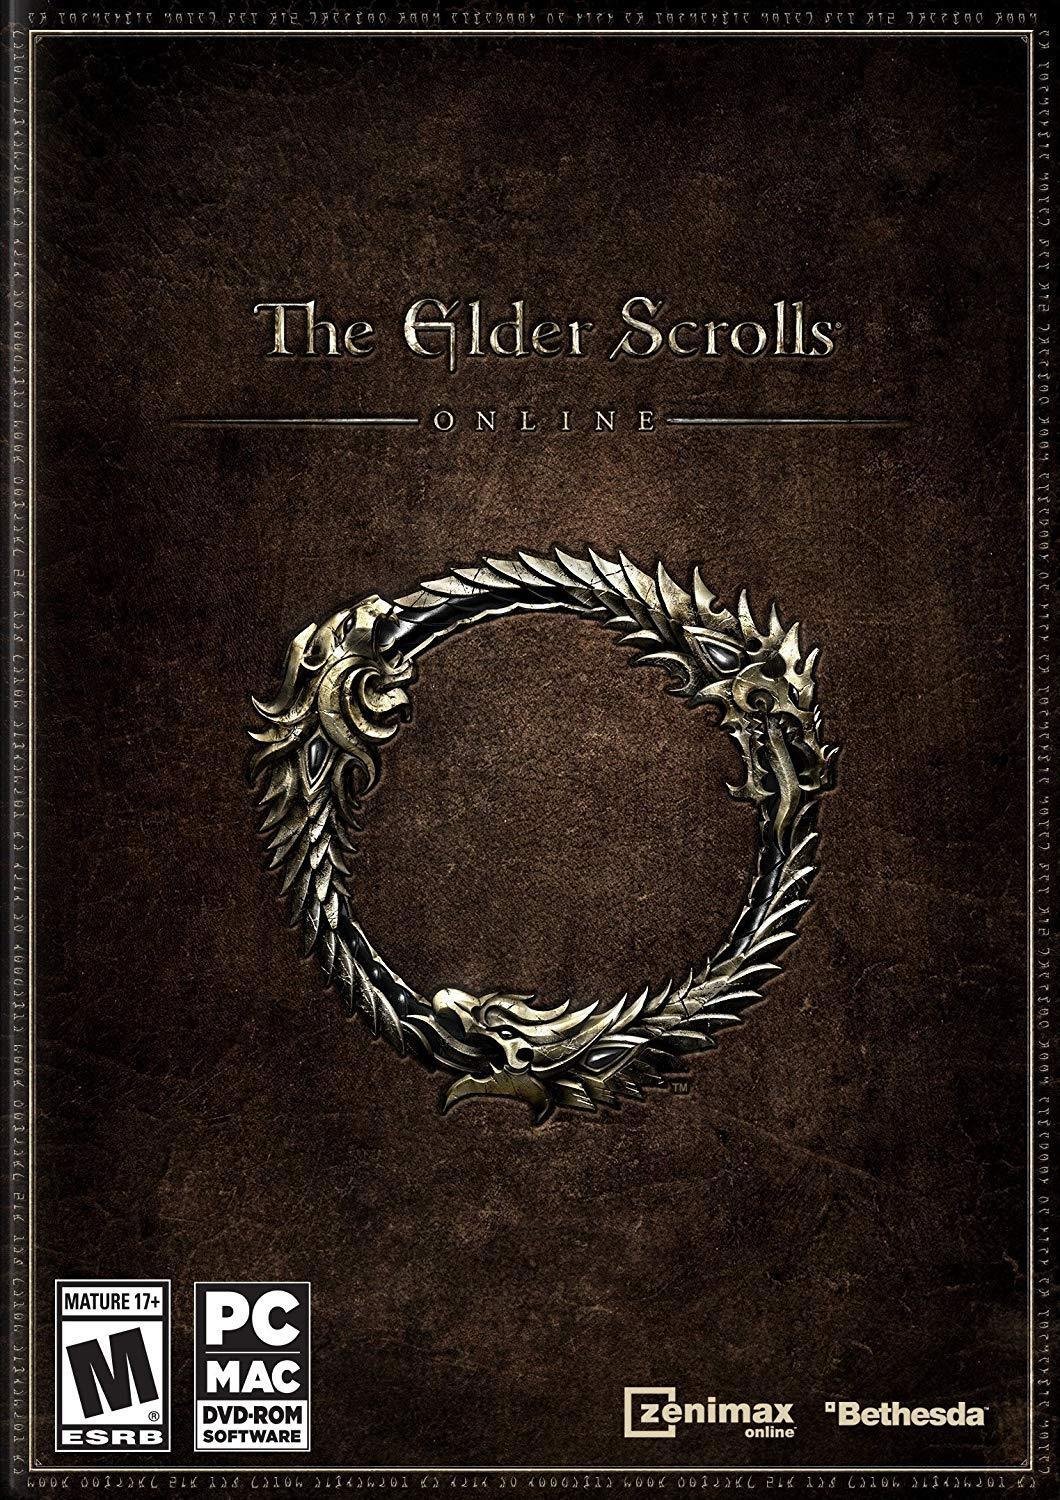 download the last version for mac The Elder Scrolls Online